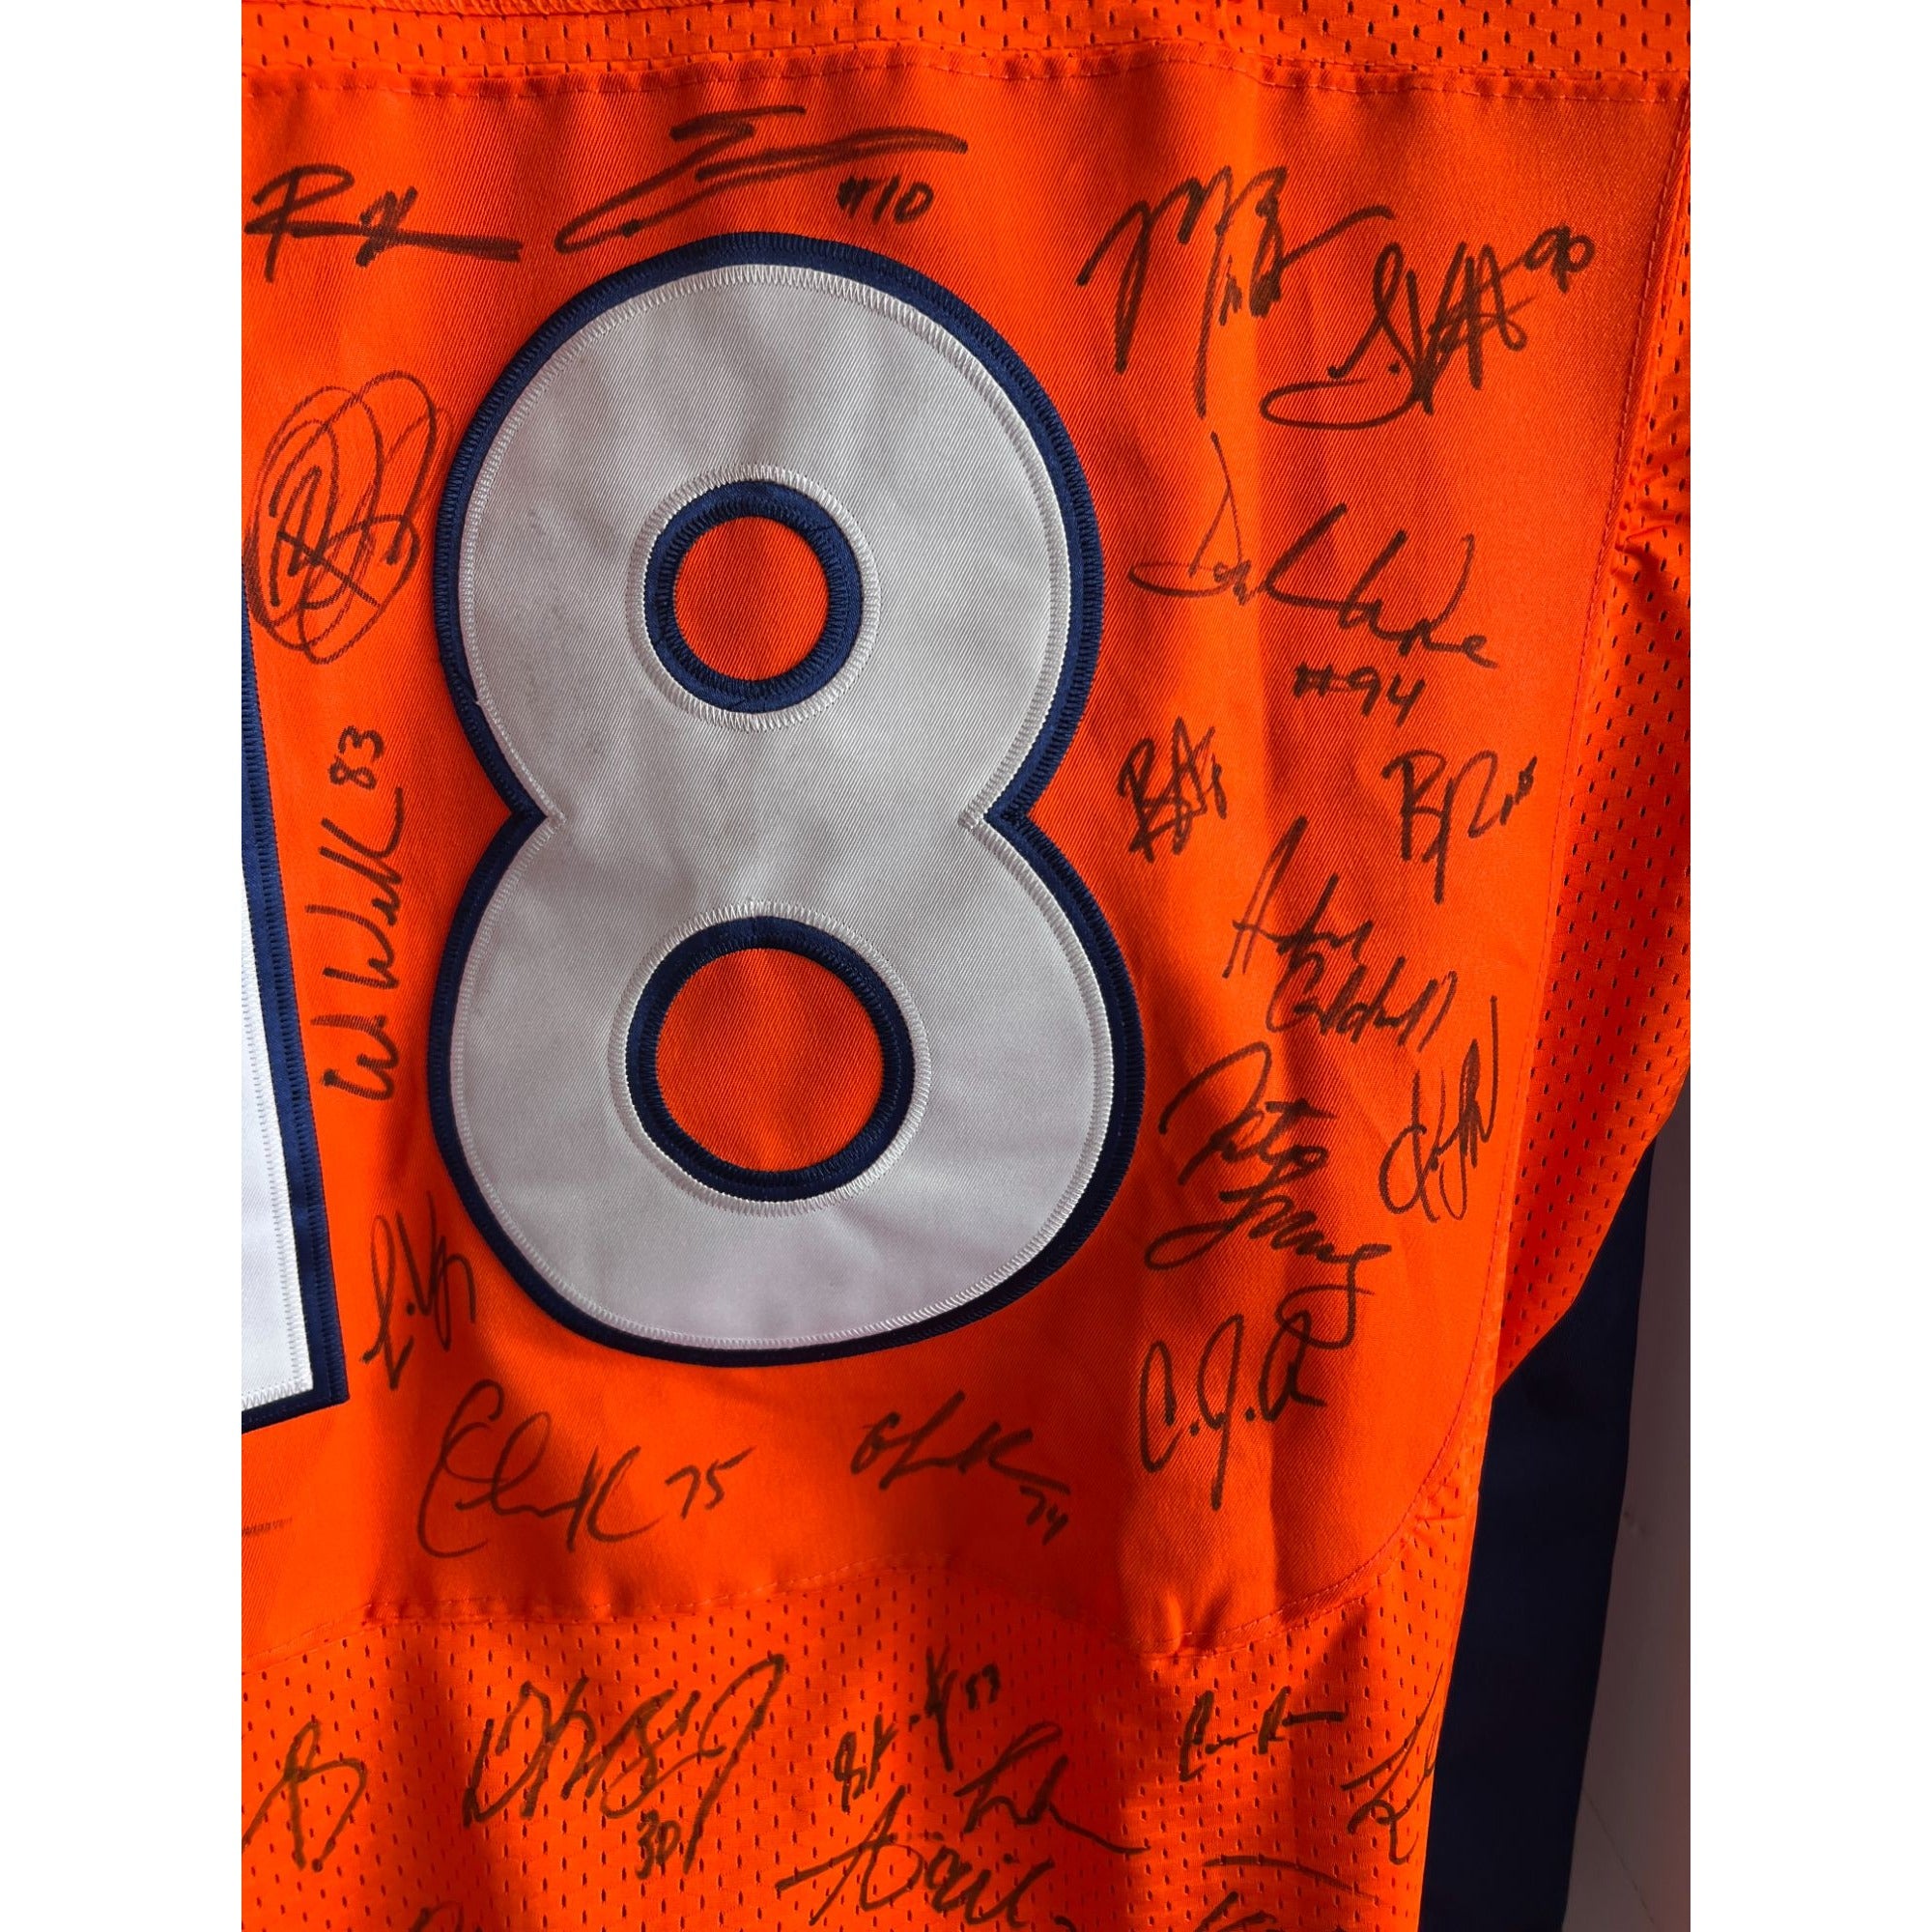 Denver Broncos Peyton Manning Demaryius Thomas Von Miller Wes Welker 2013  team signed  Size 52 Nike jersey